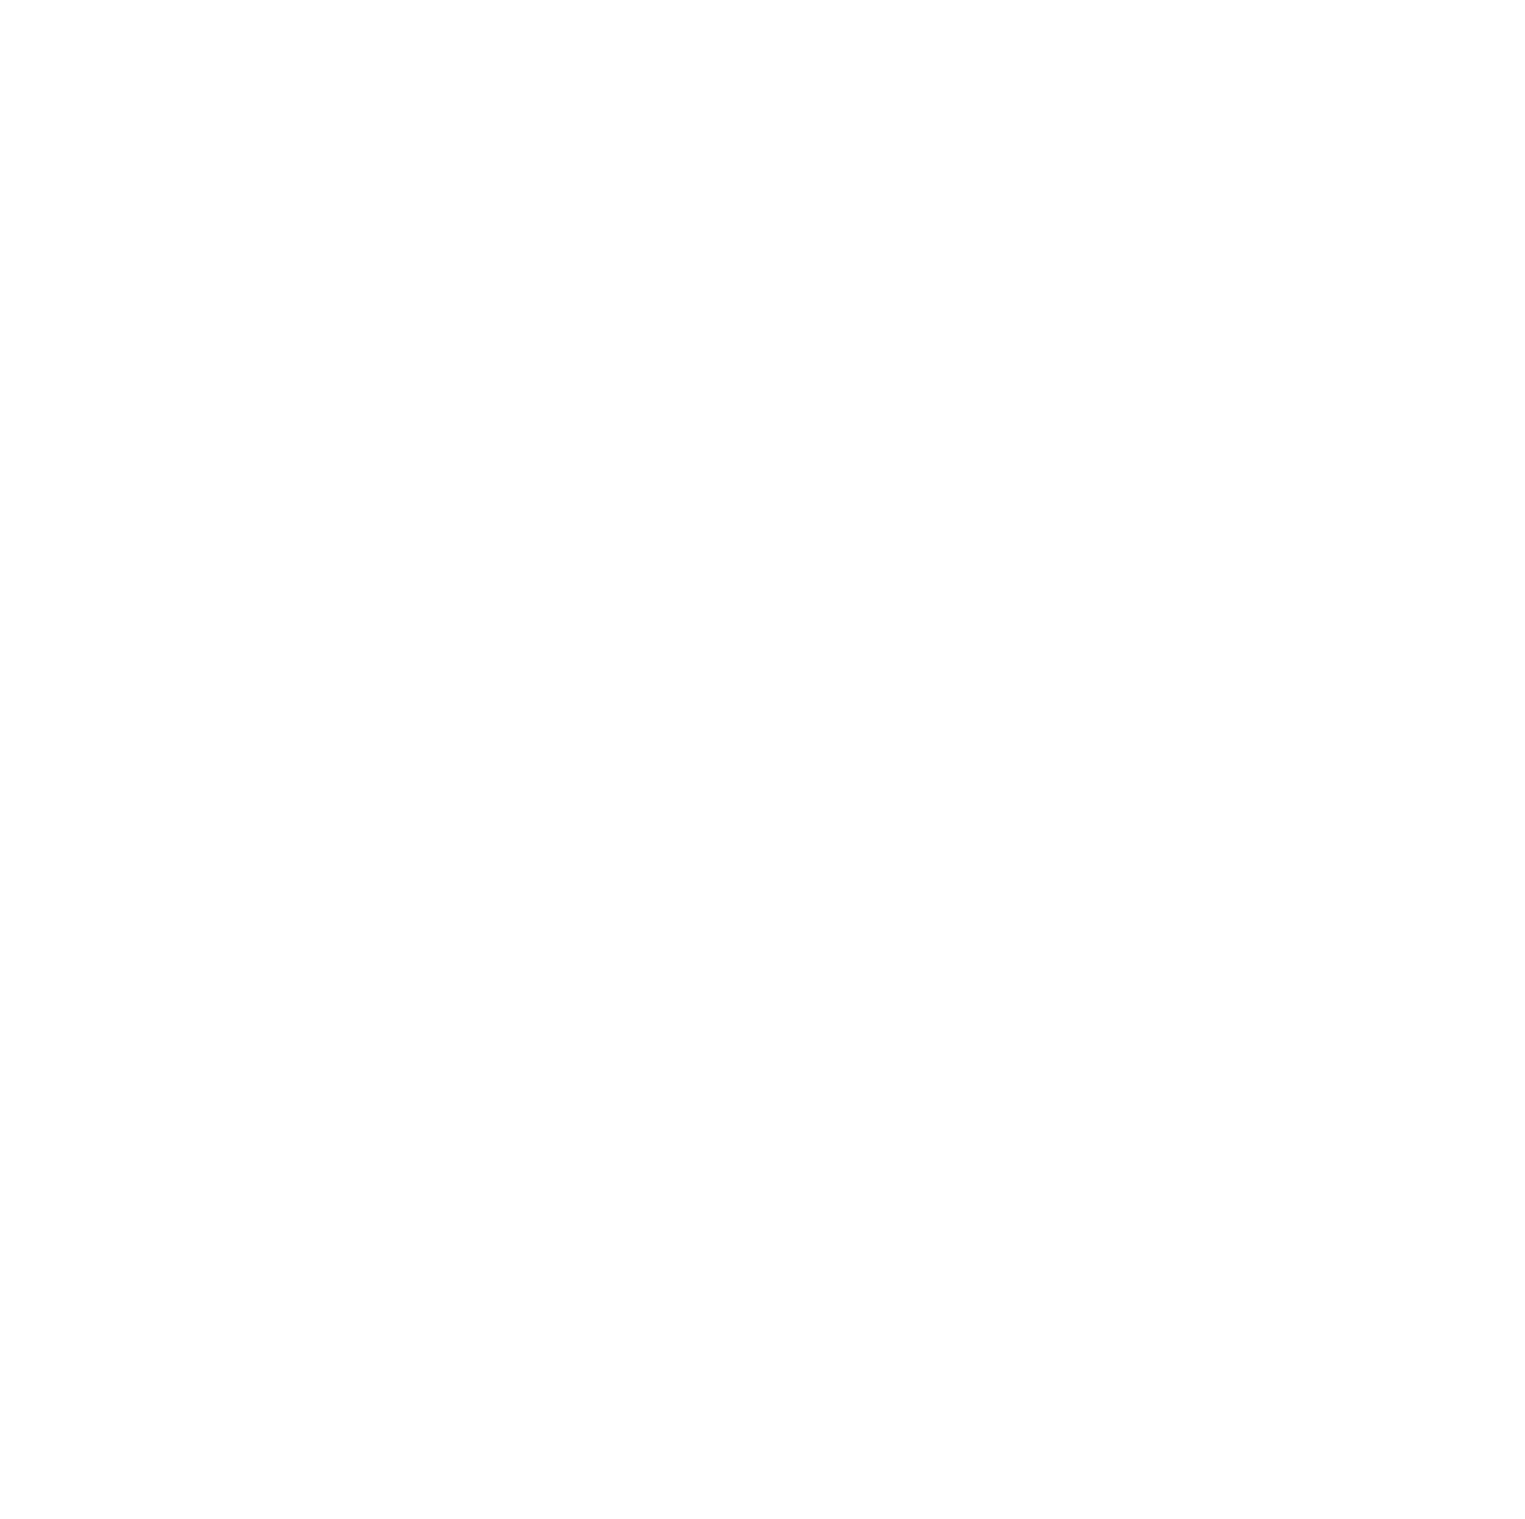 AMTD Digital logo pour fonds sombres (PNG transparent)